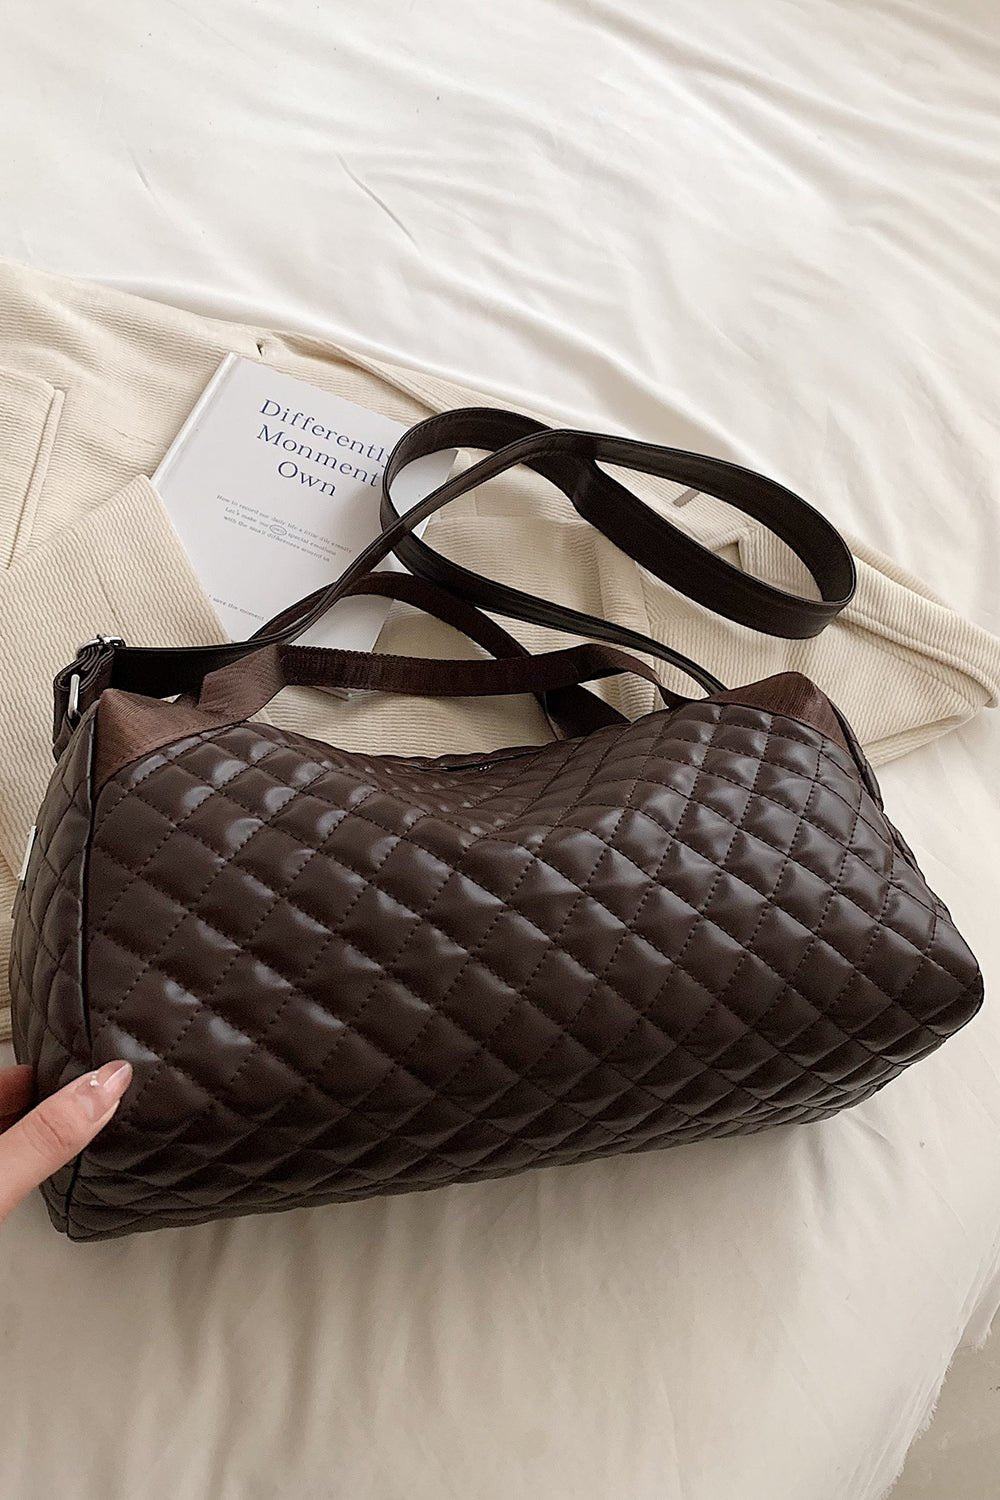 Large PU Leather Handbag - Fashion Girl Online Store